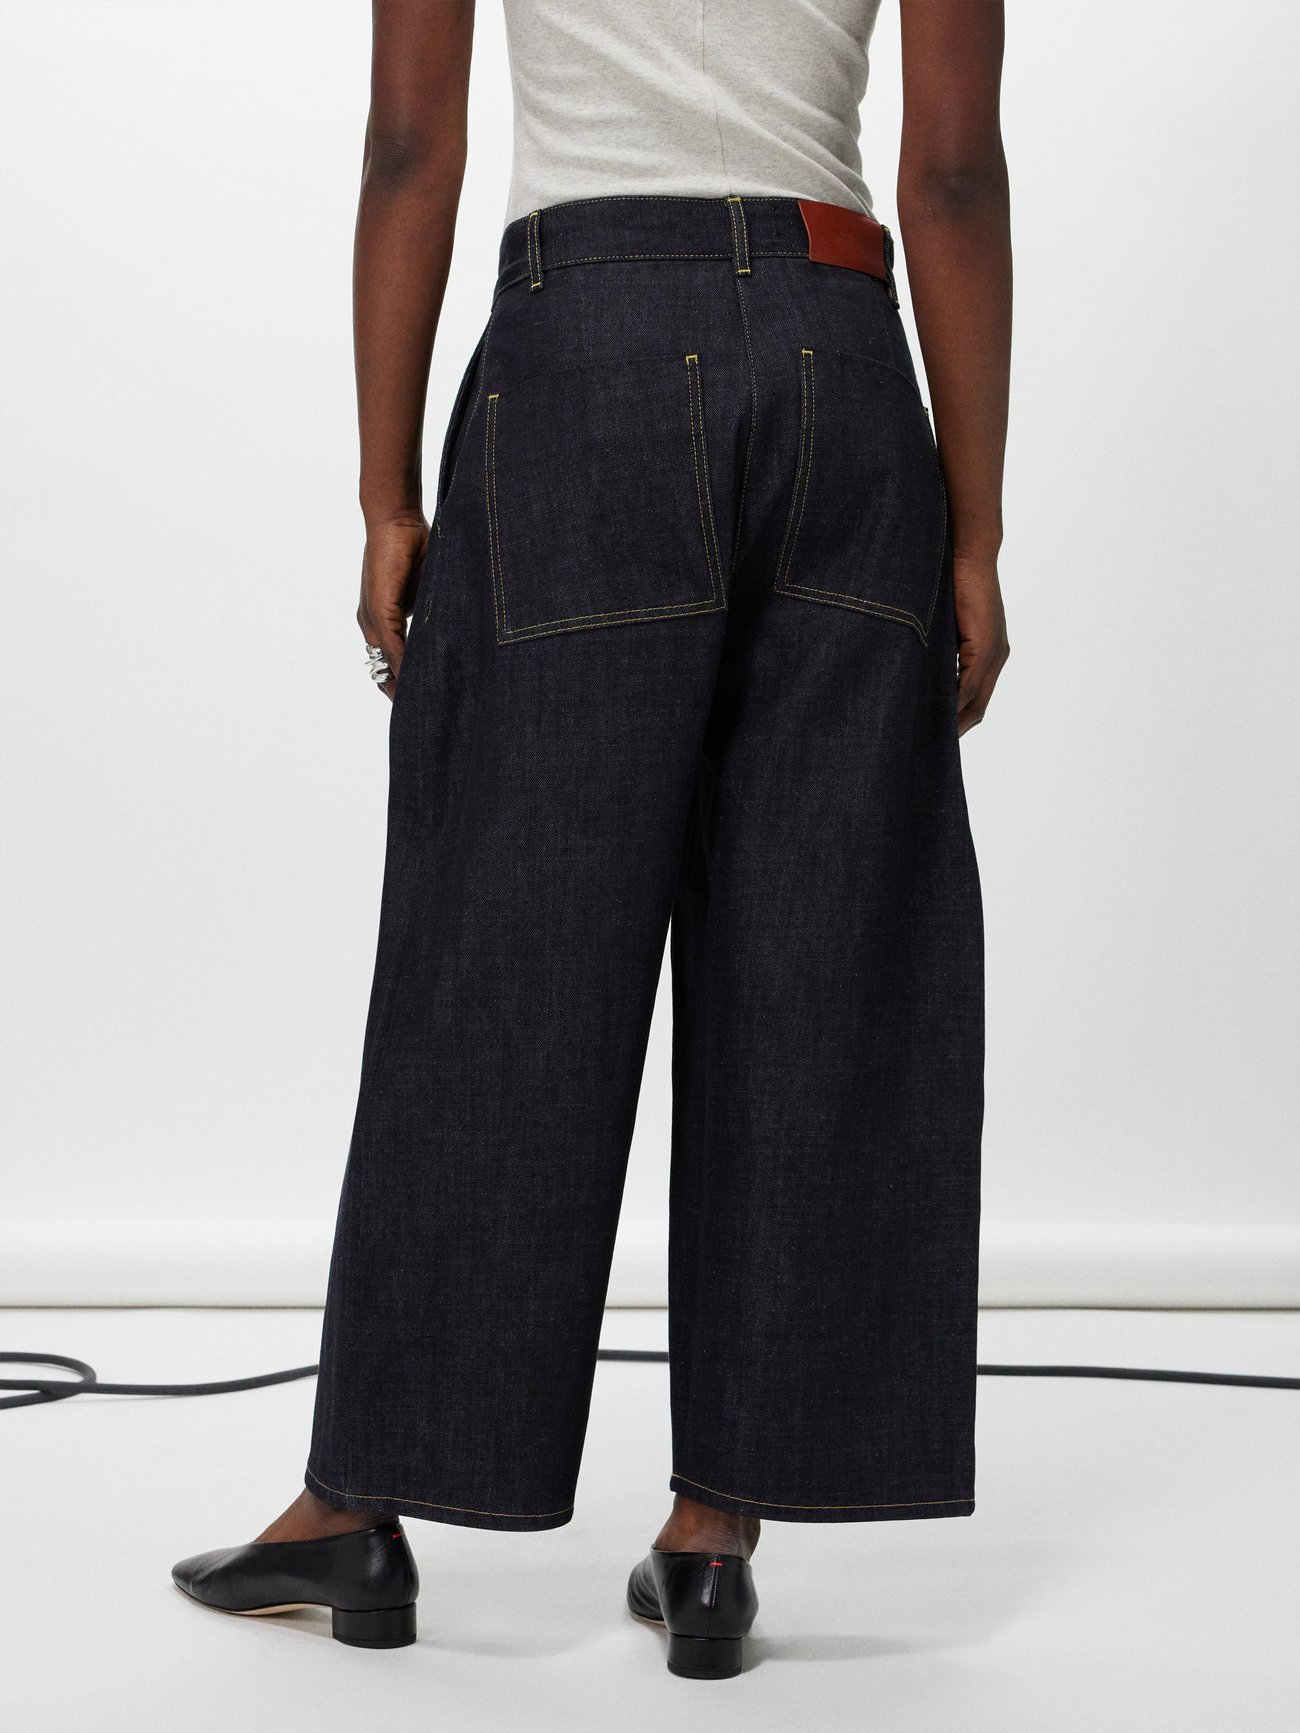 Blue Chalco cropped wide-leg jeans, Studio Nicholson